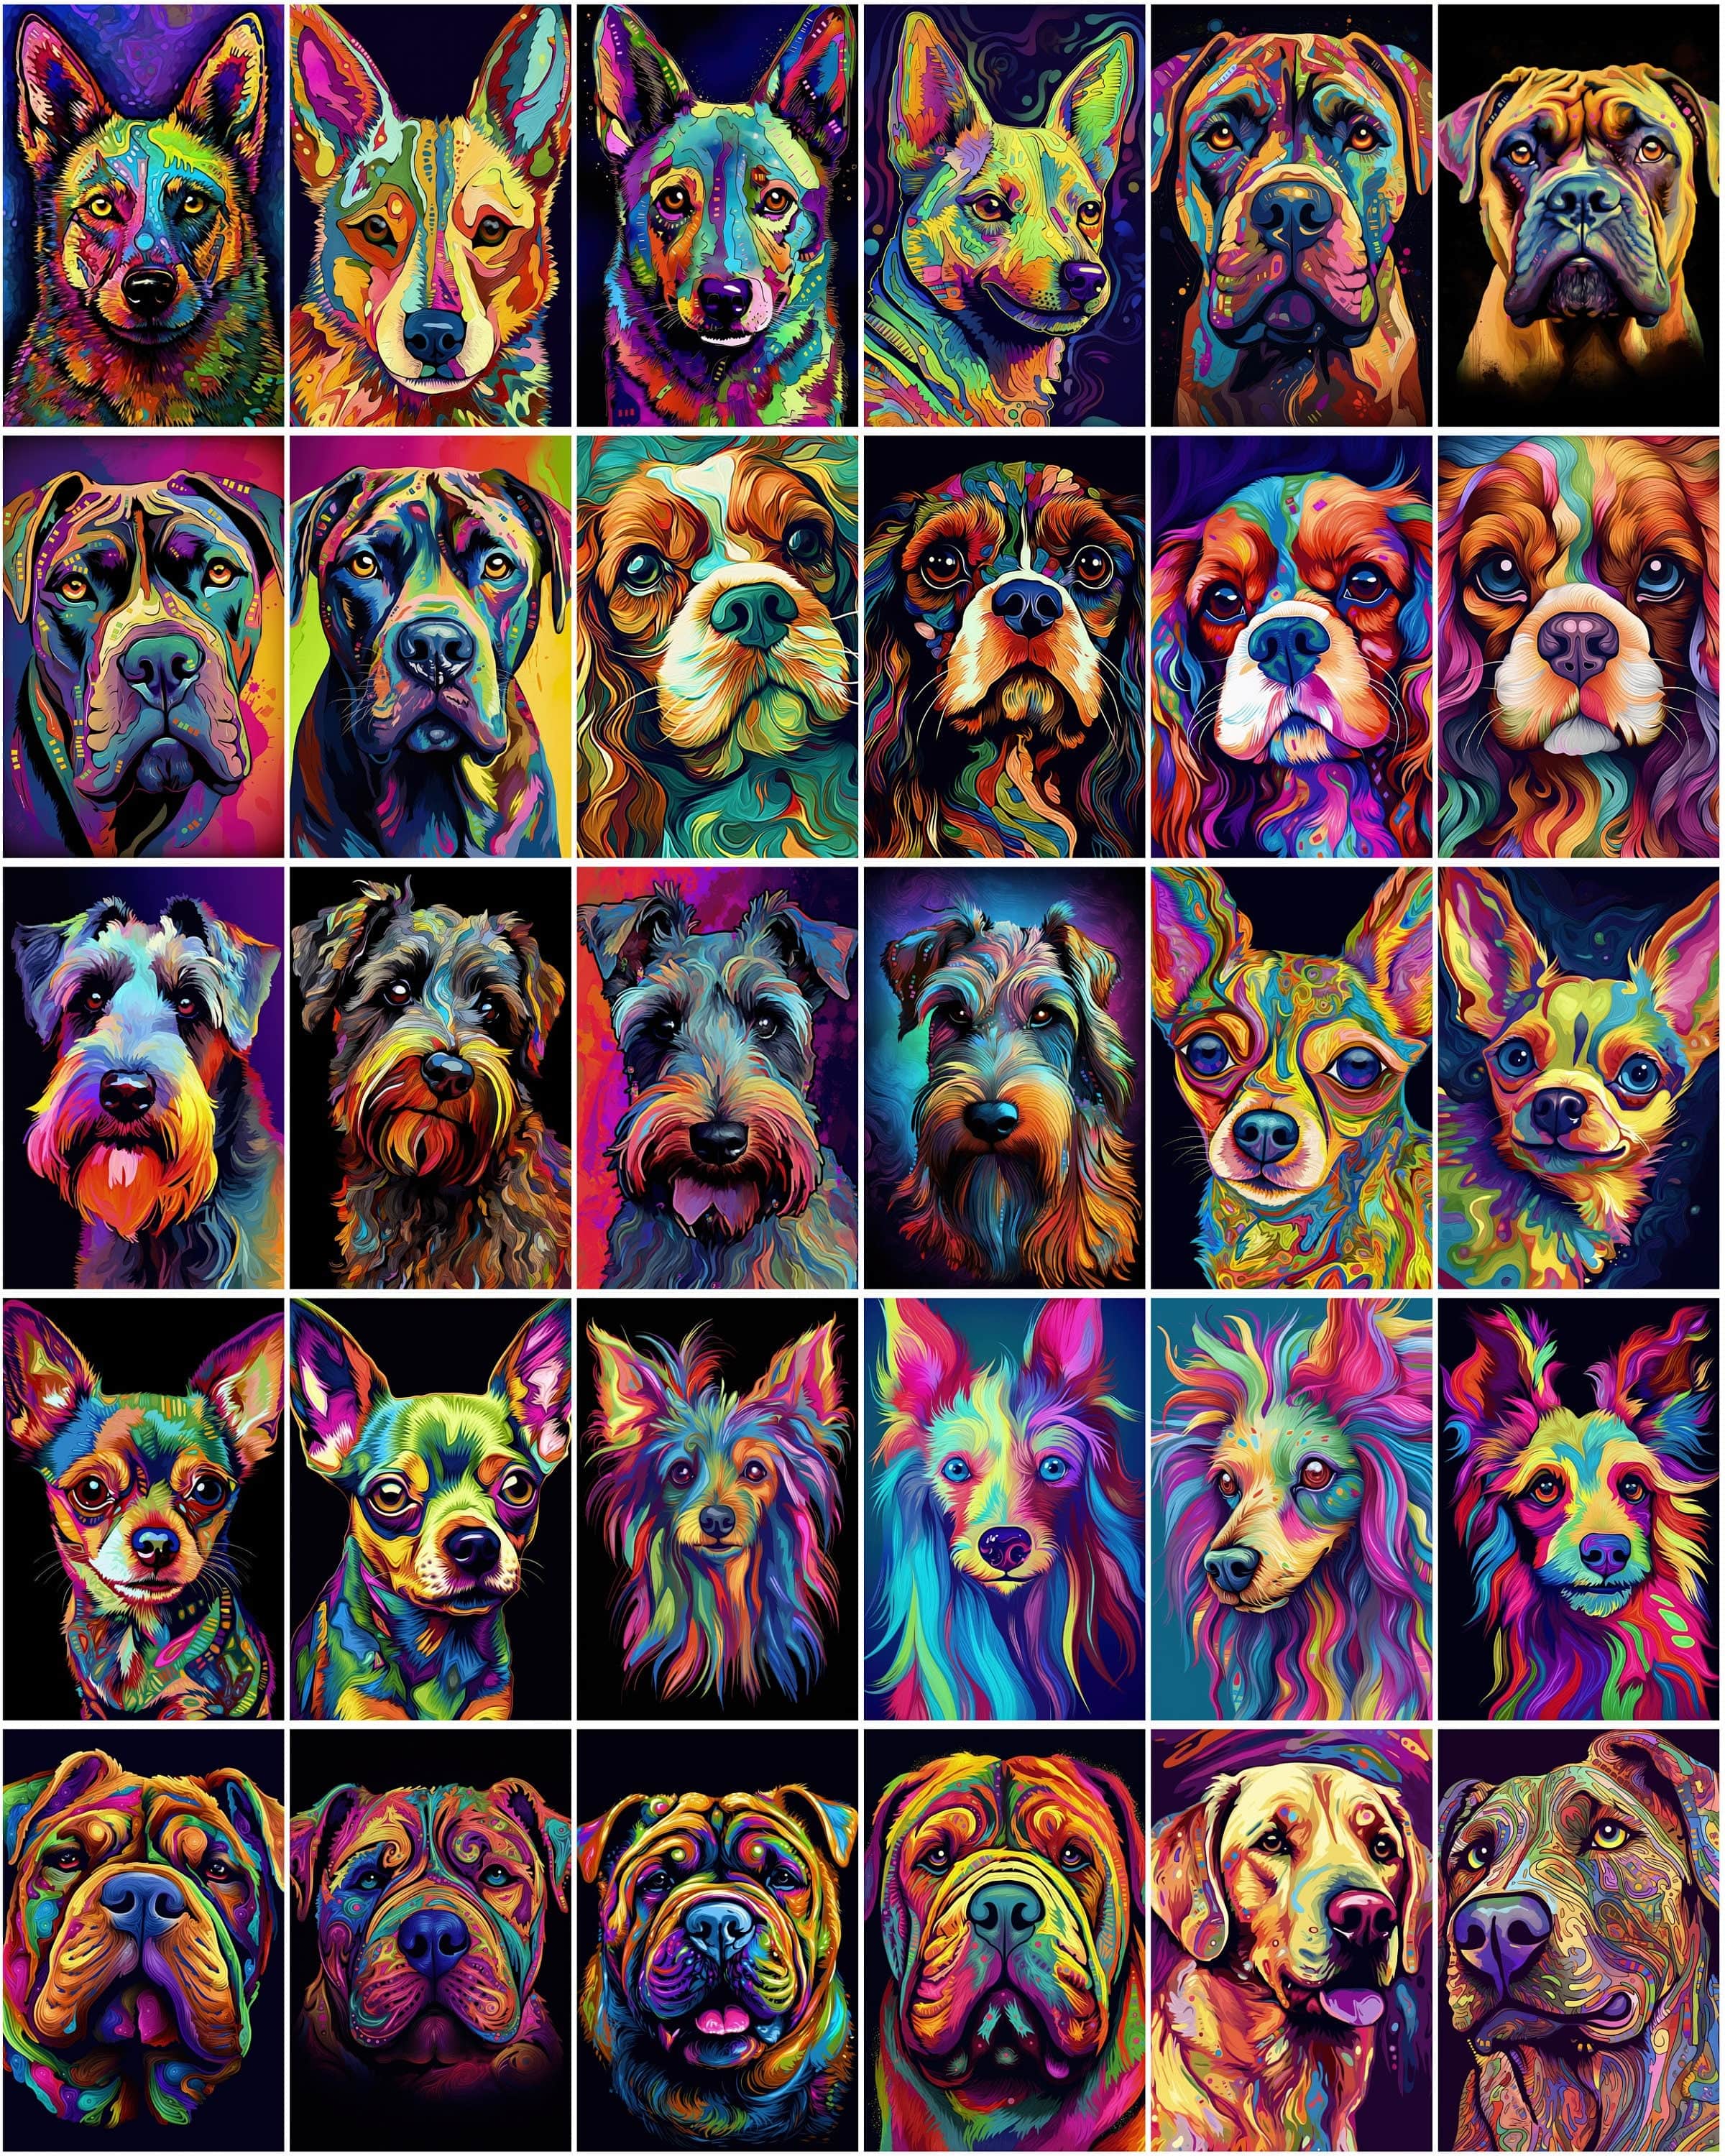 770 Psychedelic Dog Breed Images, Colorful Dog Illustrations, Commercial License Included Digital Download Sumobundle